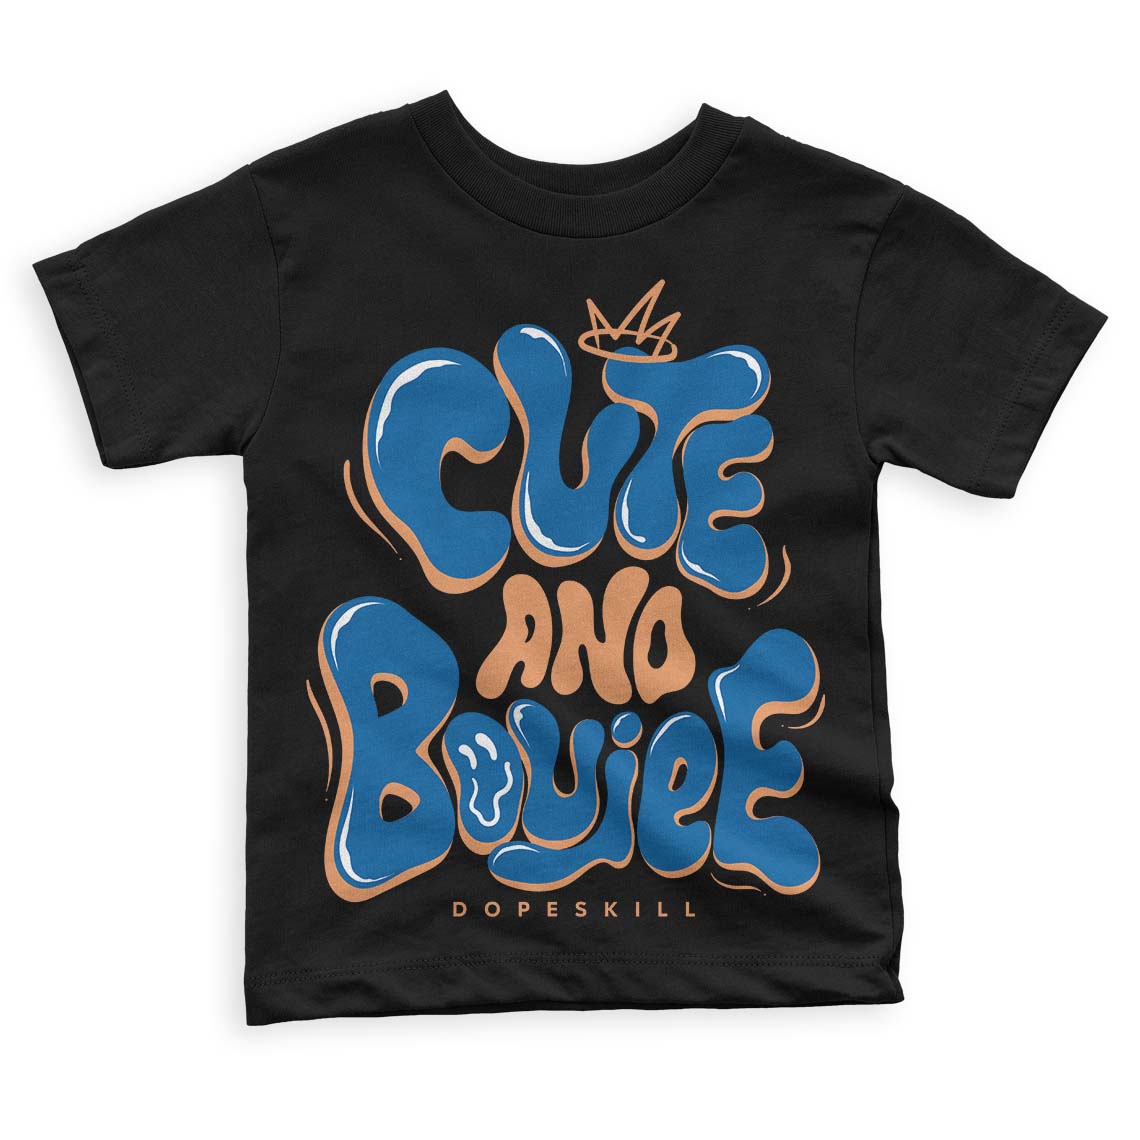 Jordan 3 Retro Wizards DopeSkill Toddler Kids T-shirt Cute and Boujee Graphic Streetwear - Black